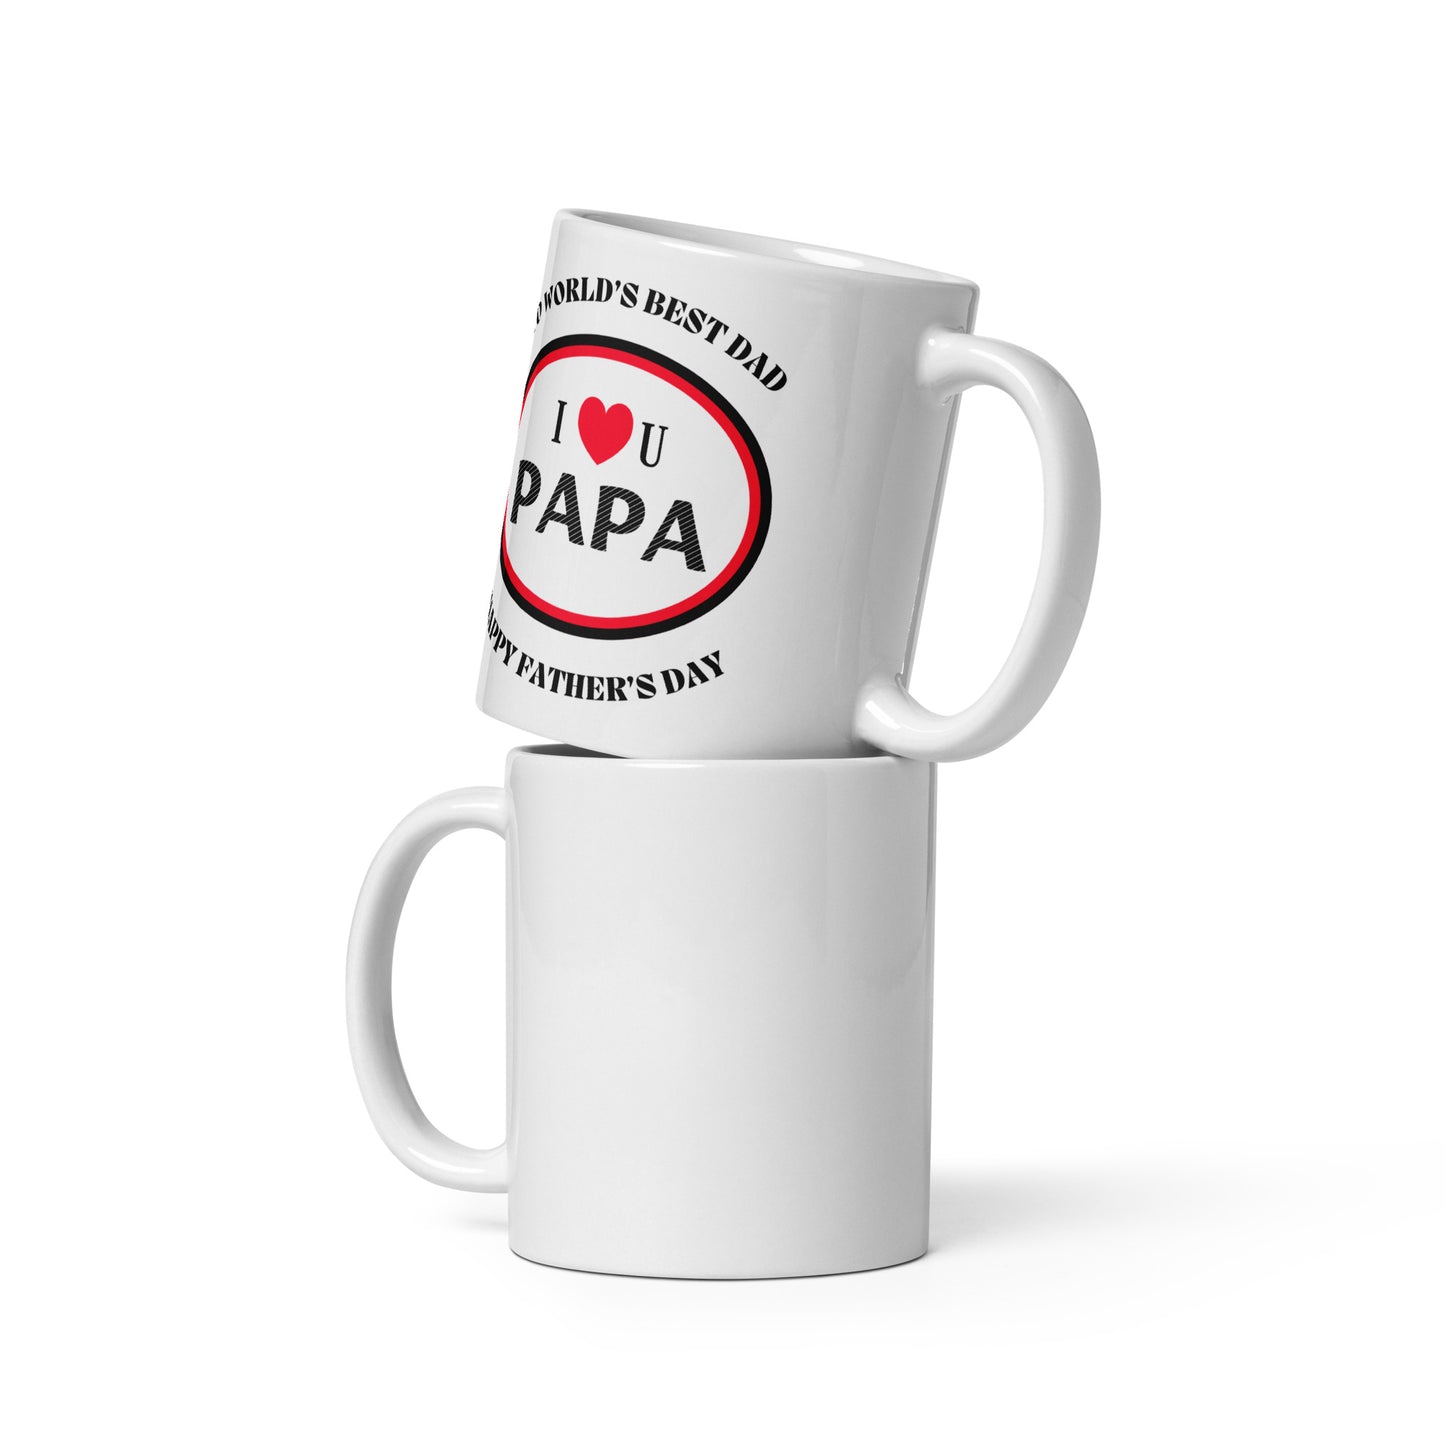 I Love You Papa - White glossy mug